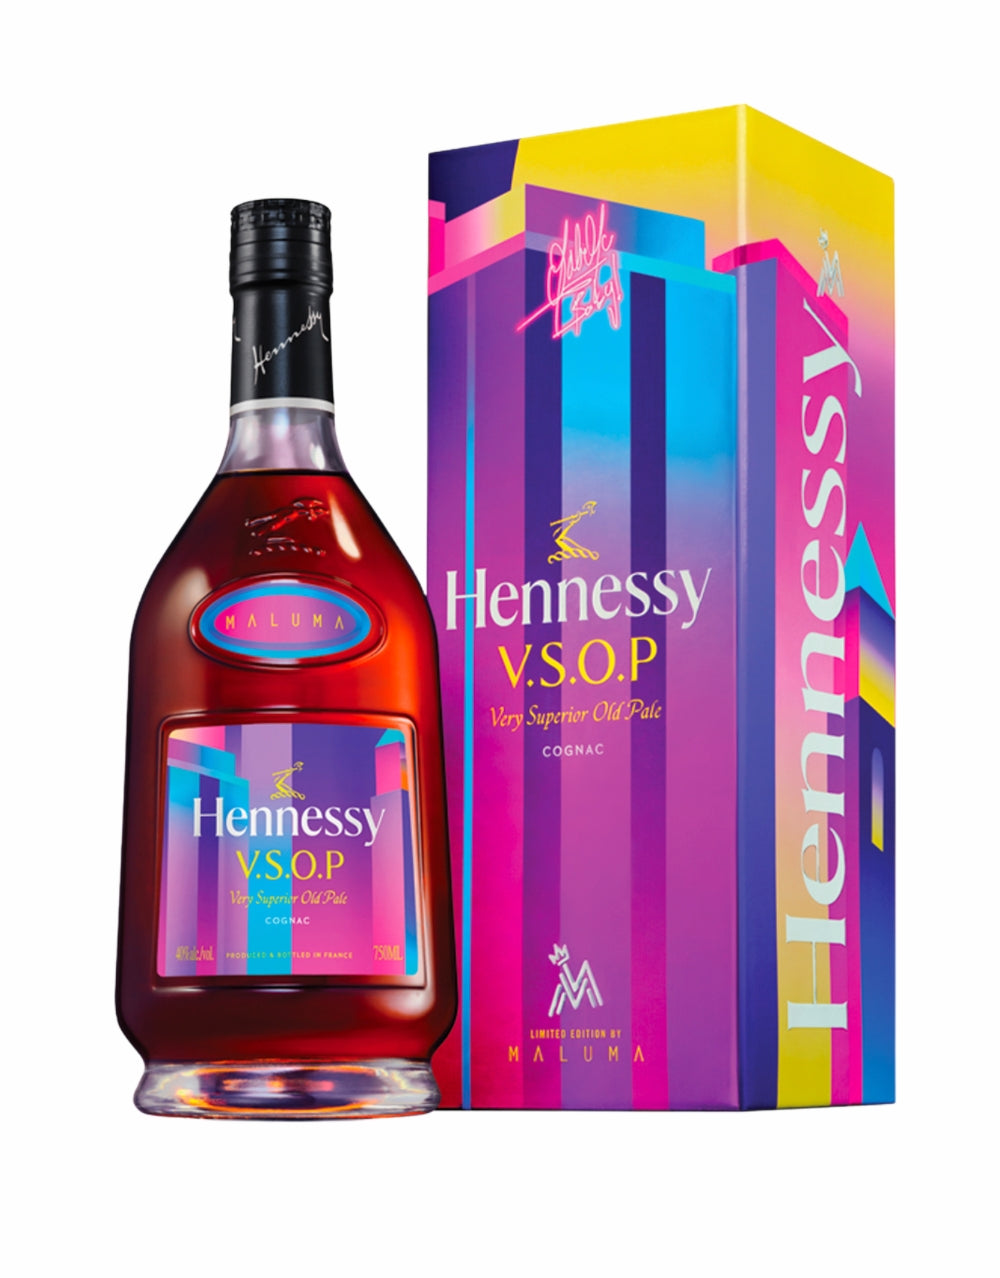 Moët Hennessy USA - The FWA